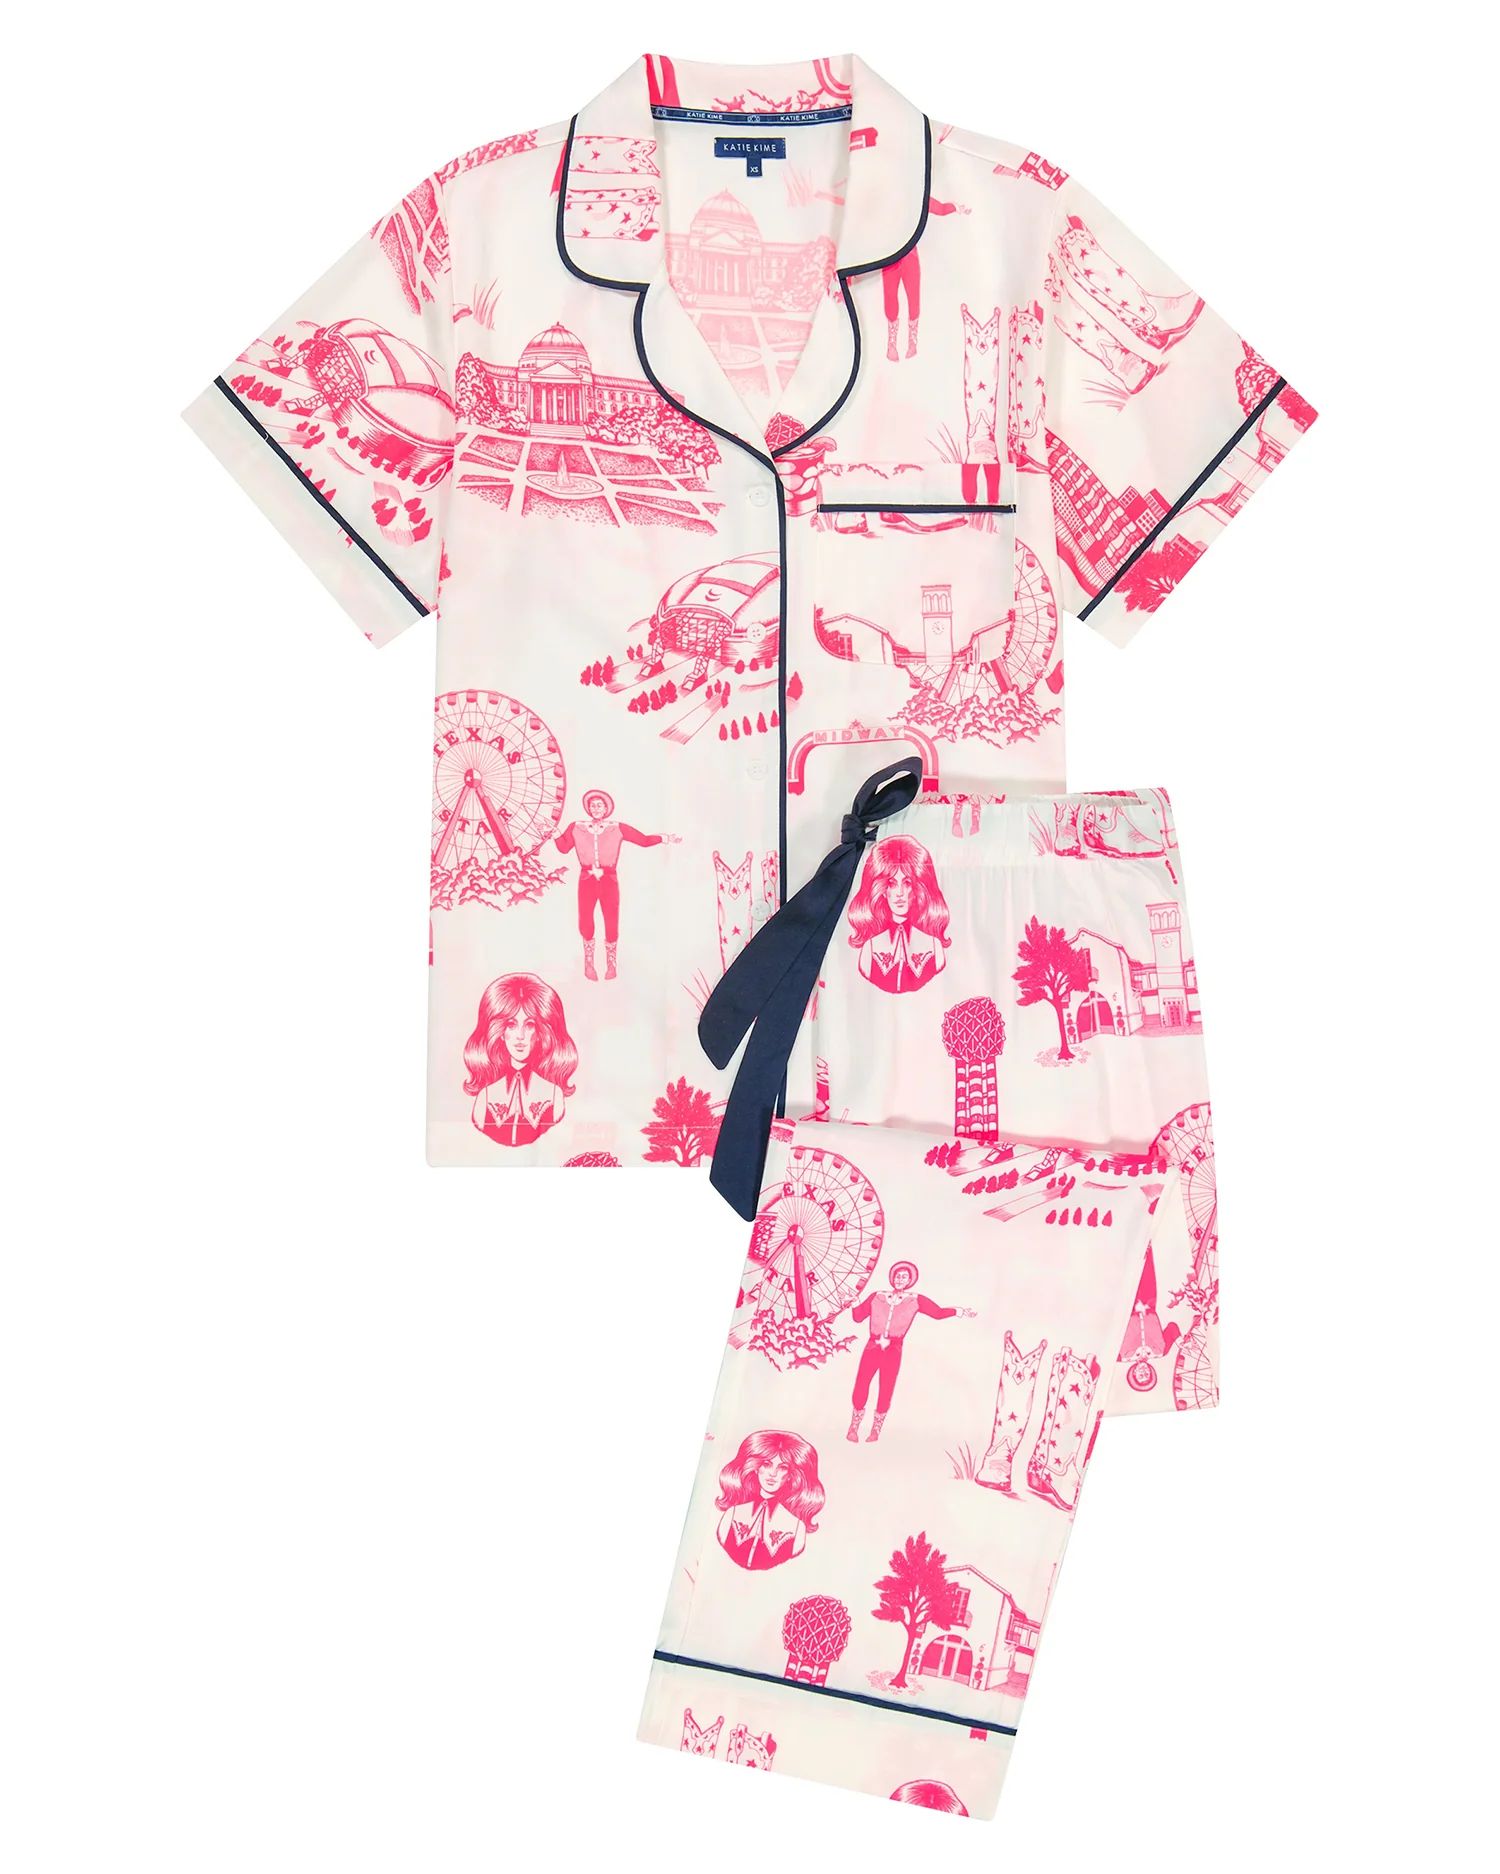 Dallas Toile Pajama Pants Set | Colorful Prints, Wallpaper, Pajamas, Home Decor, & More | Katie Kime Inc